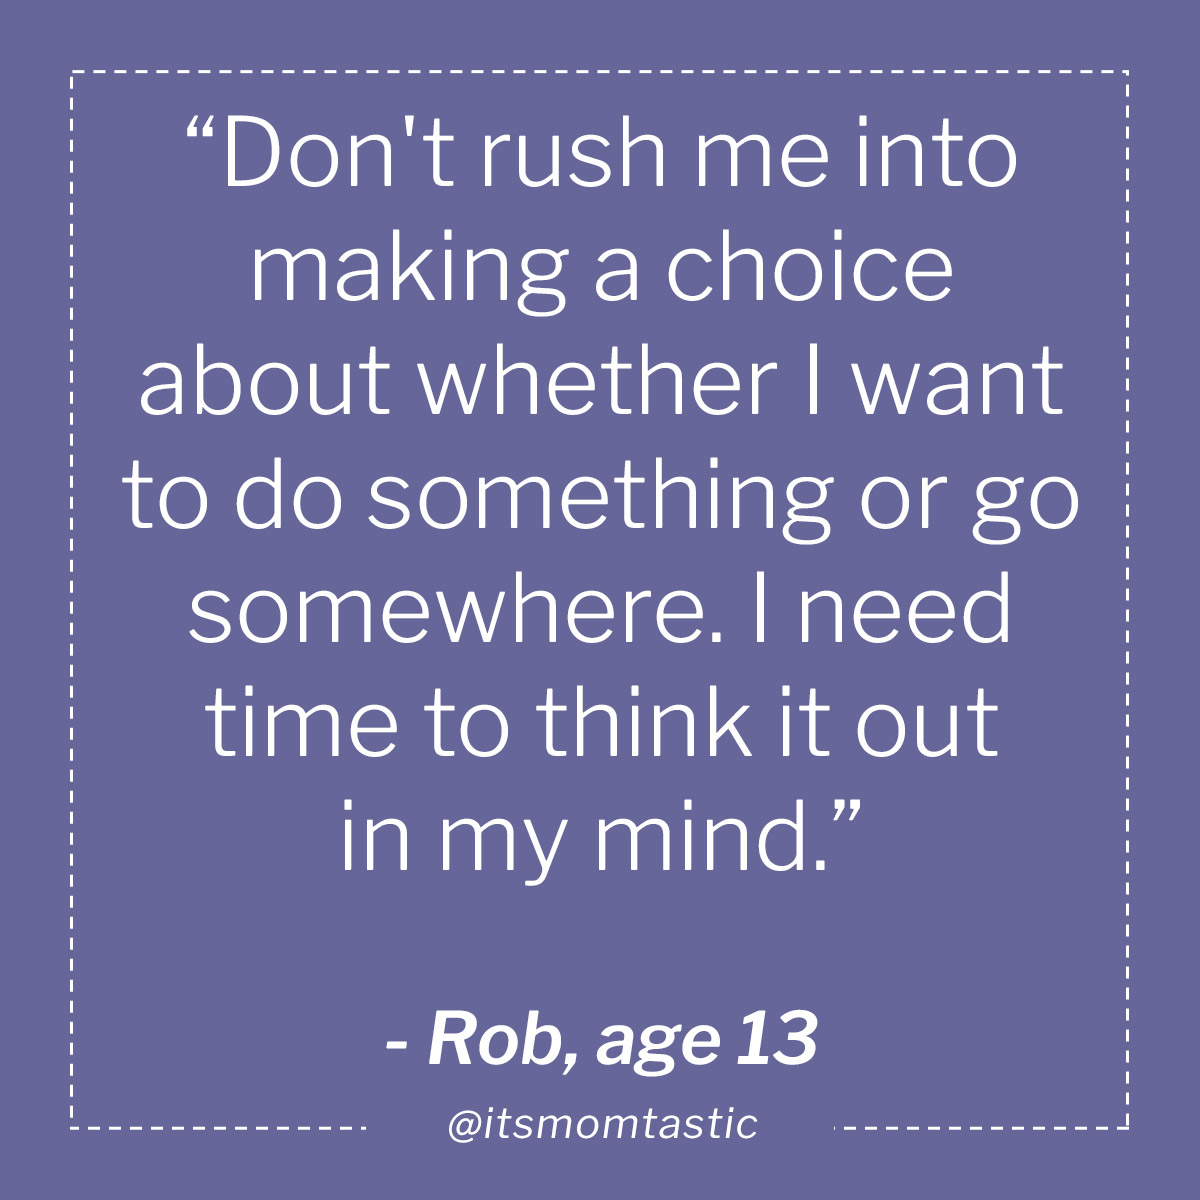 Rob, age 13